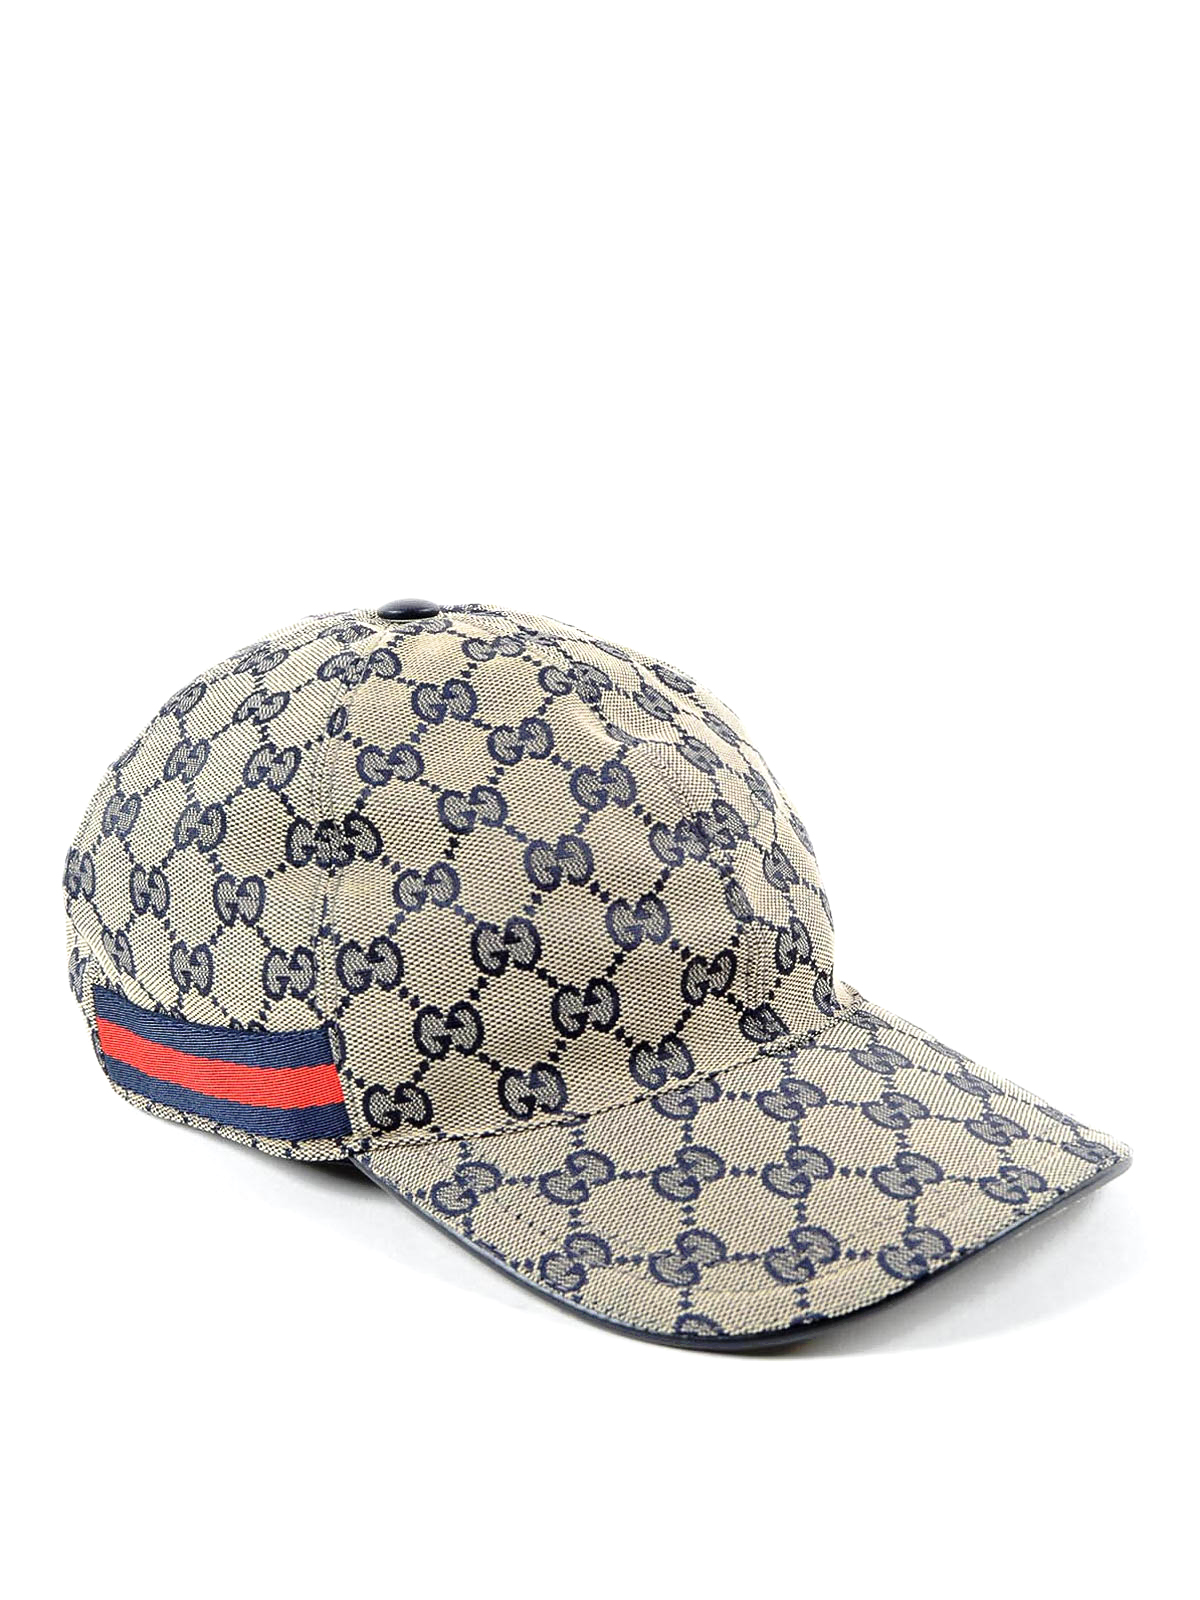 Hats & caps Gucci - GG SUPREME BASEBALL HAT - 200035KQW6G4080